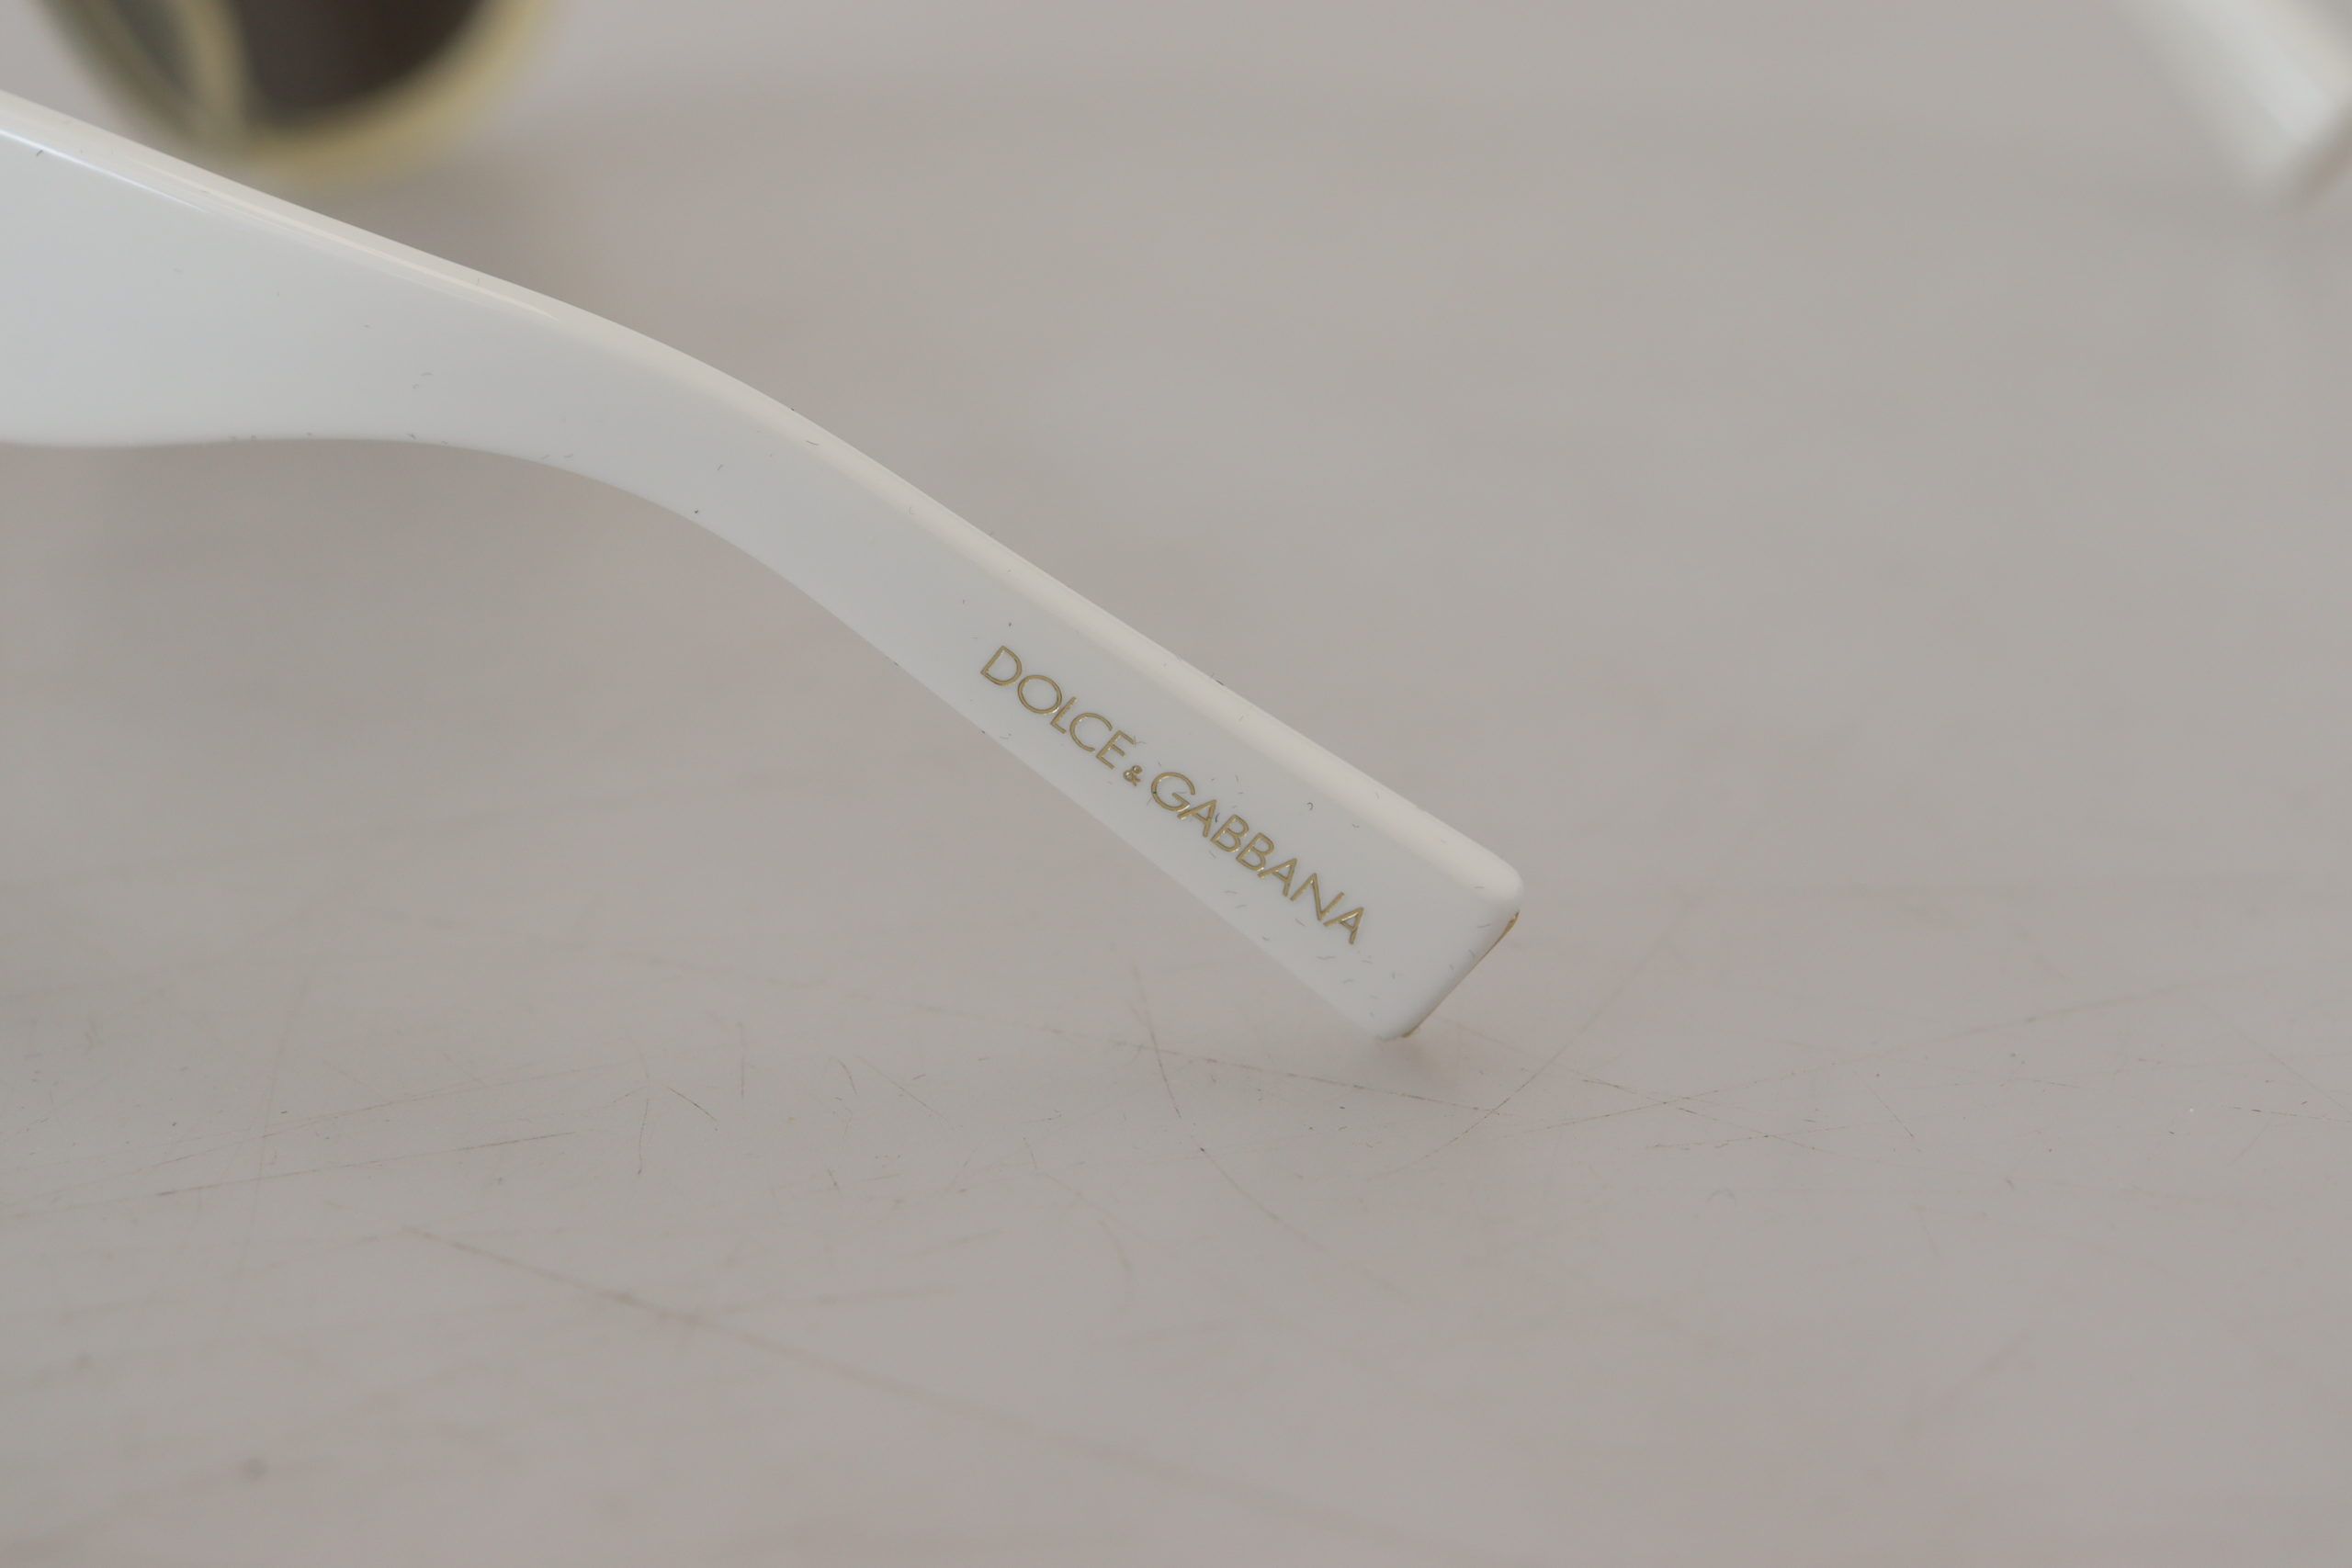 Dolce & Gabbana Elegant White Acetate Sunglasses for Women